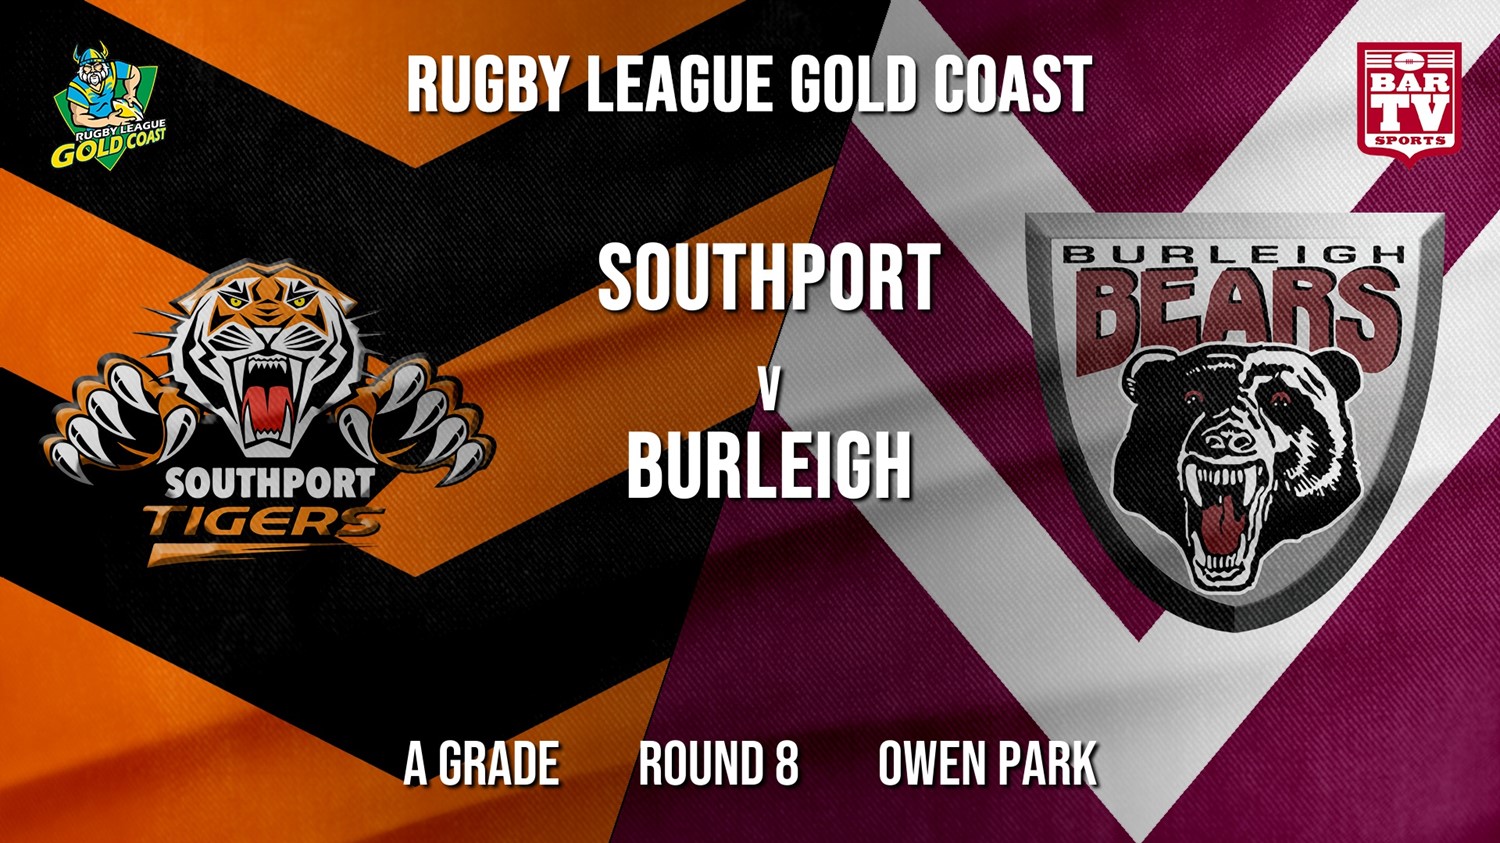 RLGC Round 8 - A Grade - Southport Tigers v Burleigh Bears Minigame Slate Image